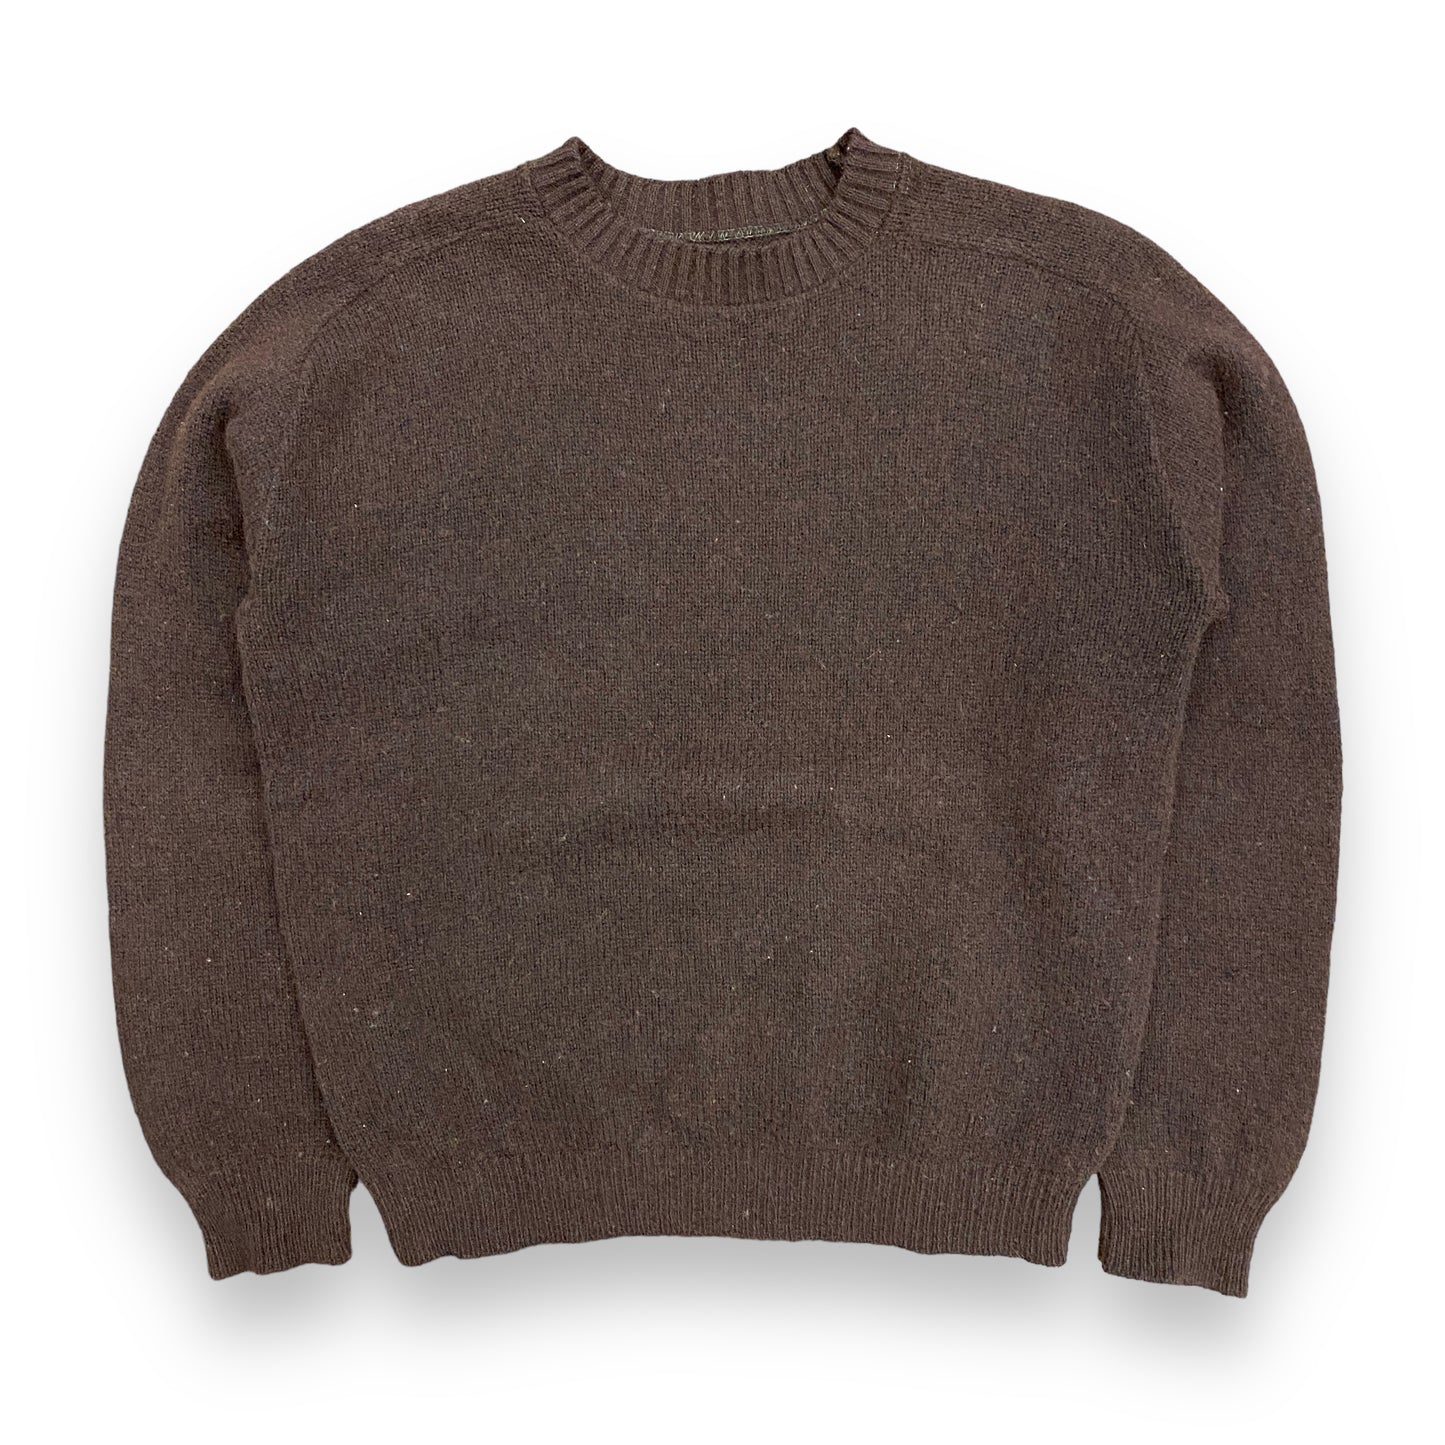 1970s Brown Pure Wool Sweater - Size Medium